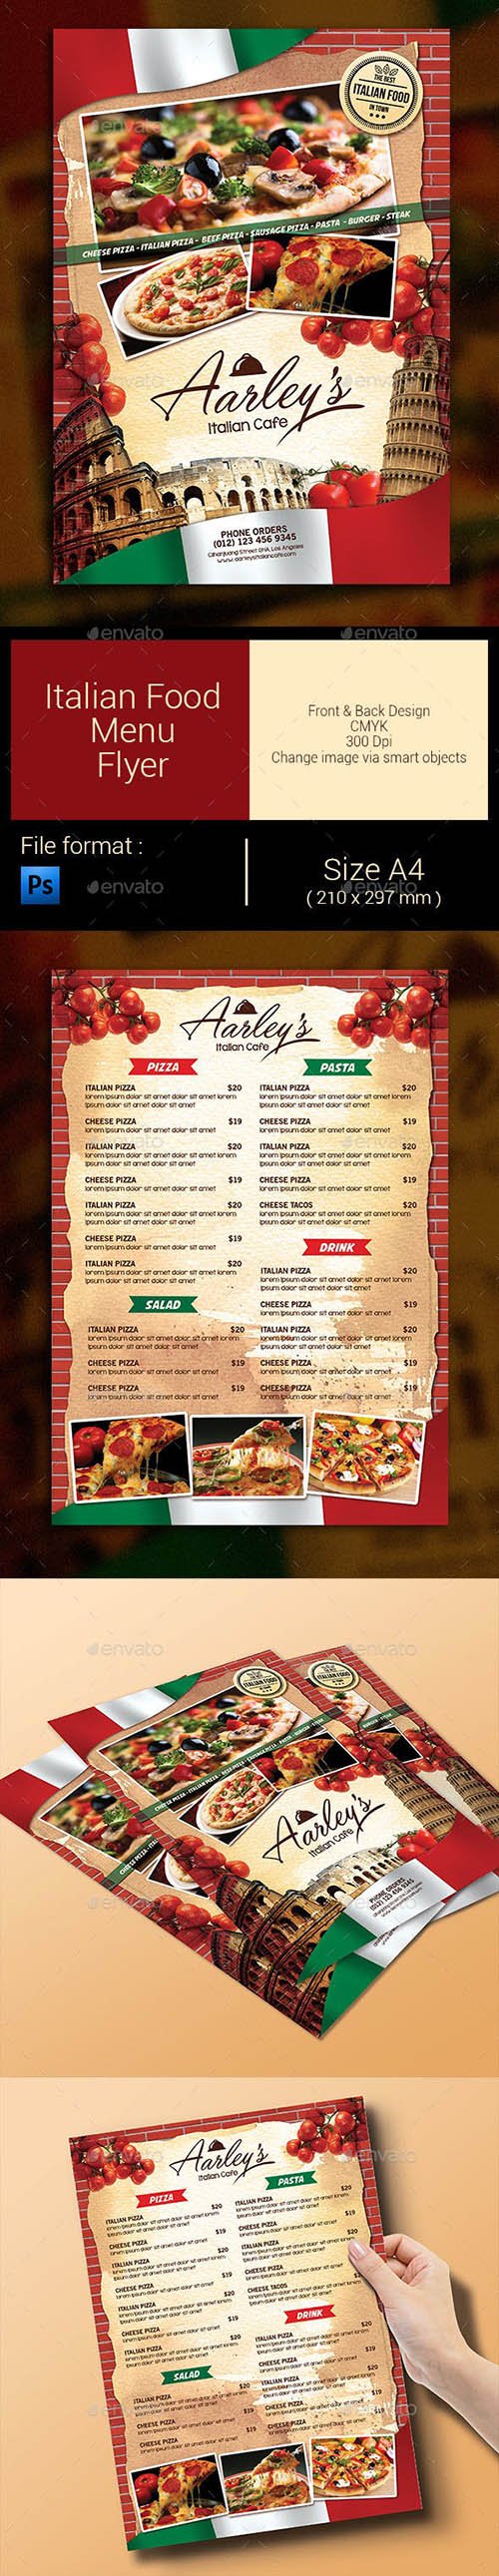 Italian Food Menu Flyer 9267264